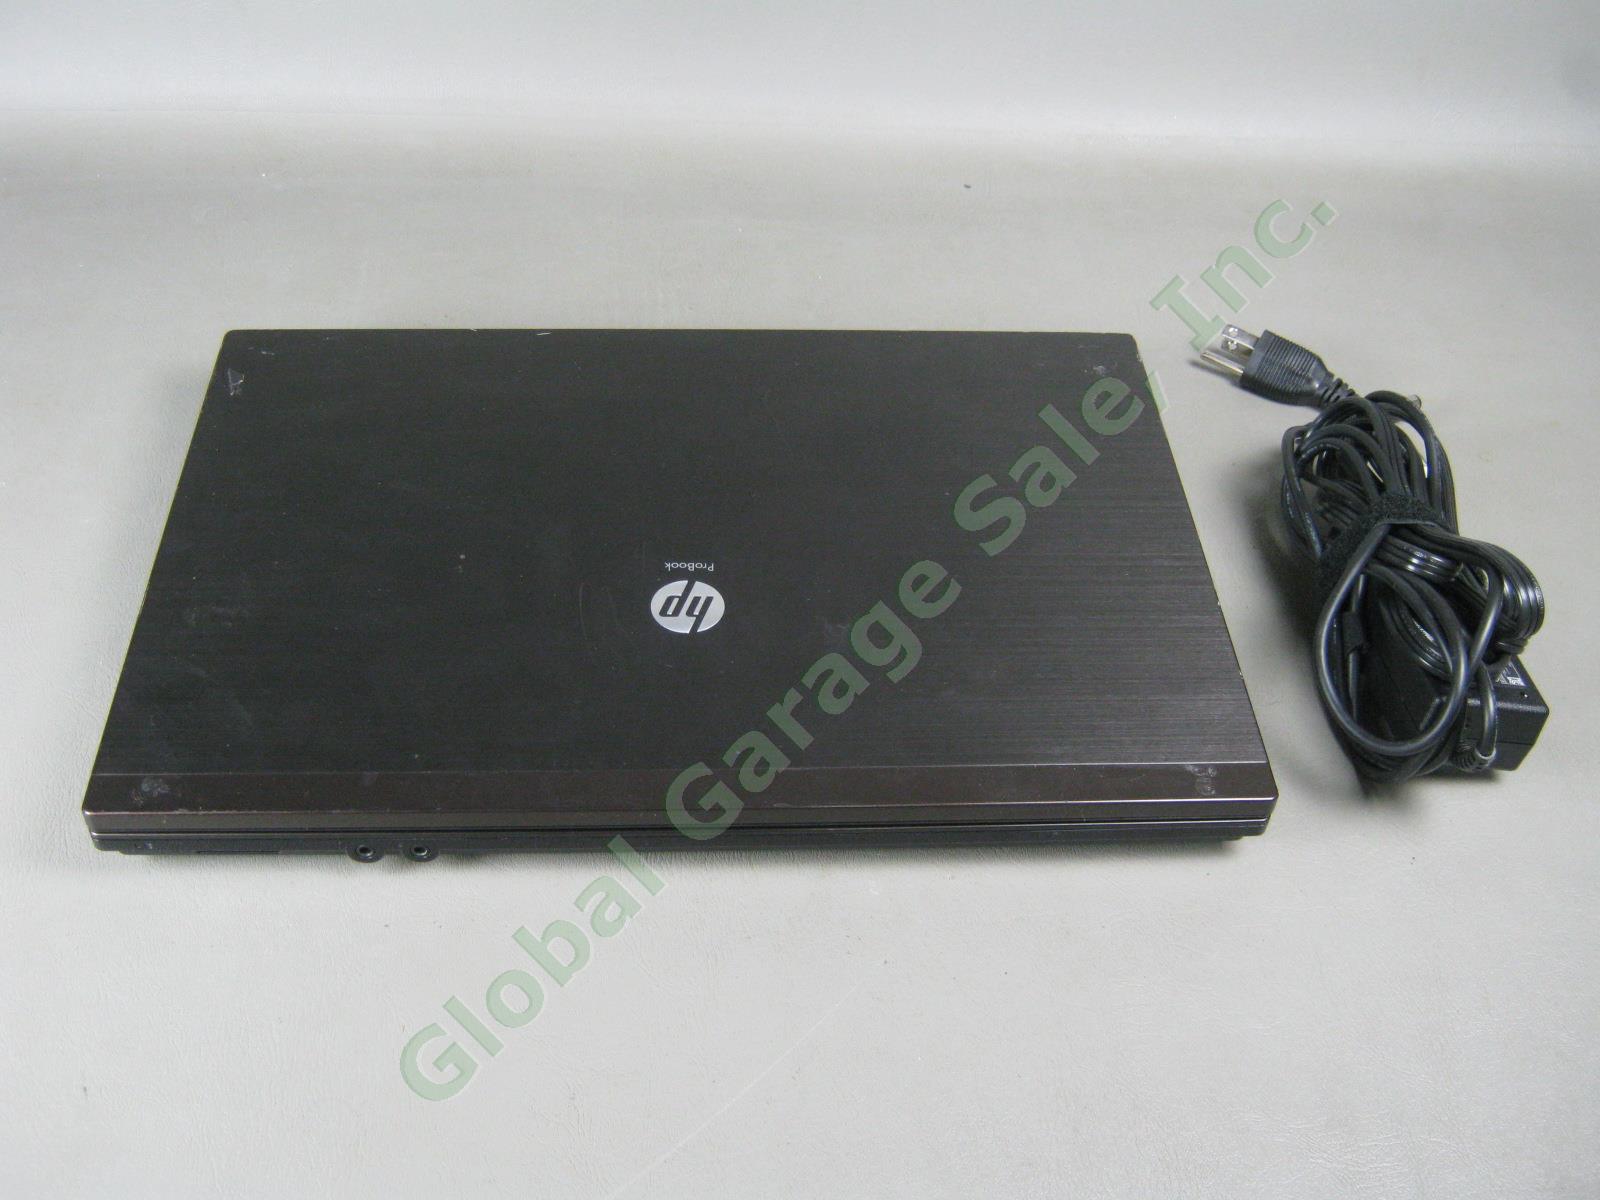 HP 4520s ProBook Laptop Computer Intel Core i5 M520 2.40GHz 4GB Windows 7 Pro NR 3